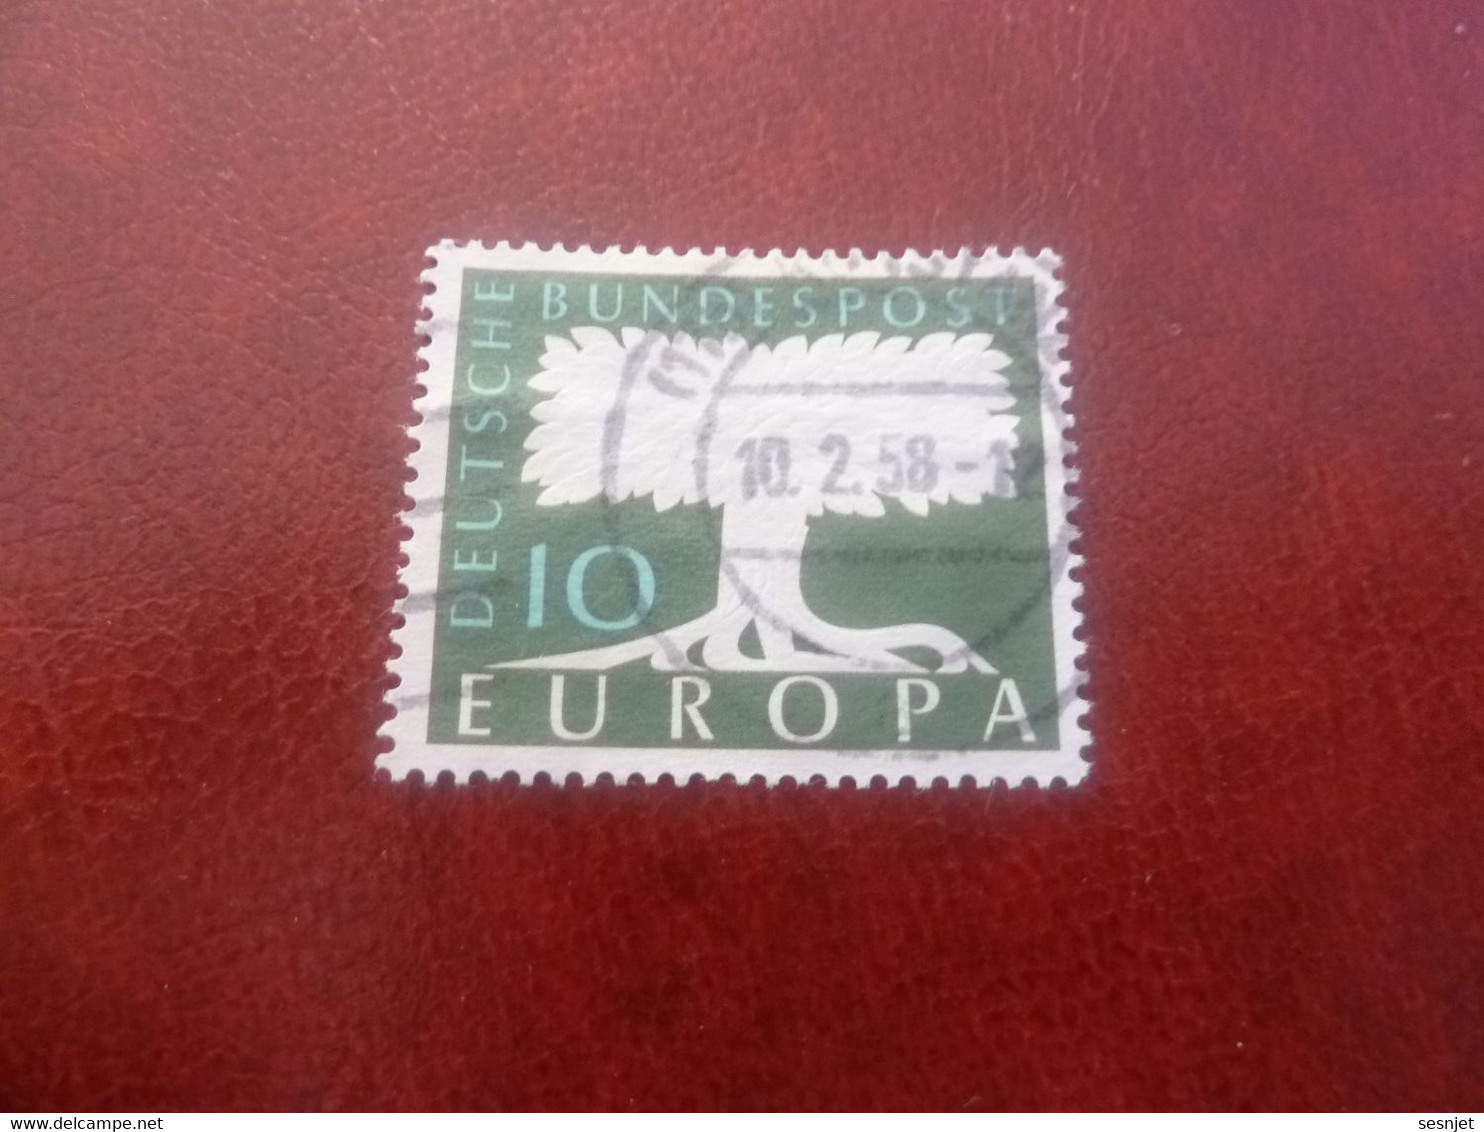 Deutsche Bundespost - Europa - Val 10 - Vert Et Blanc - Oblitéré - Année 1958 - - 1958